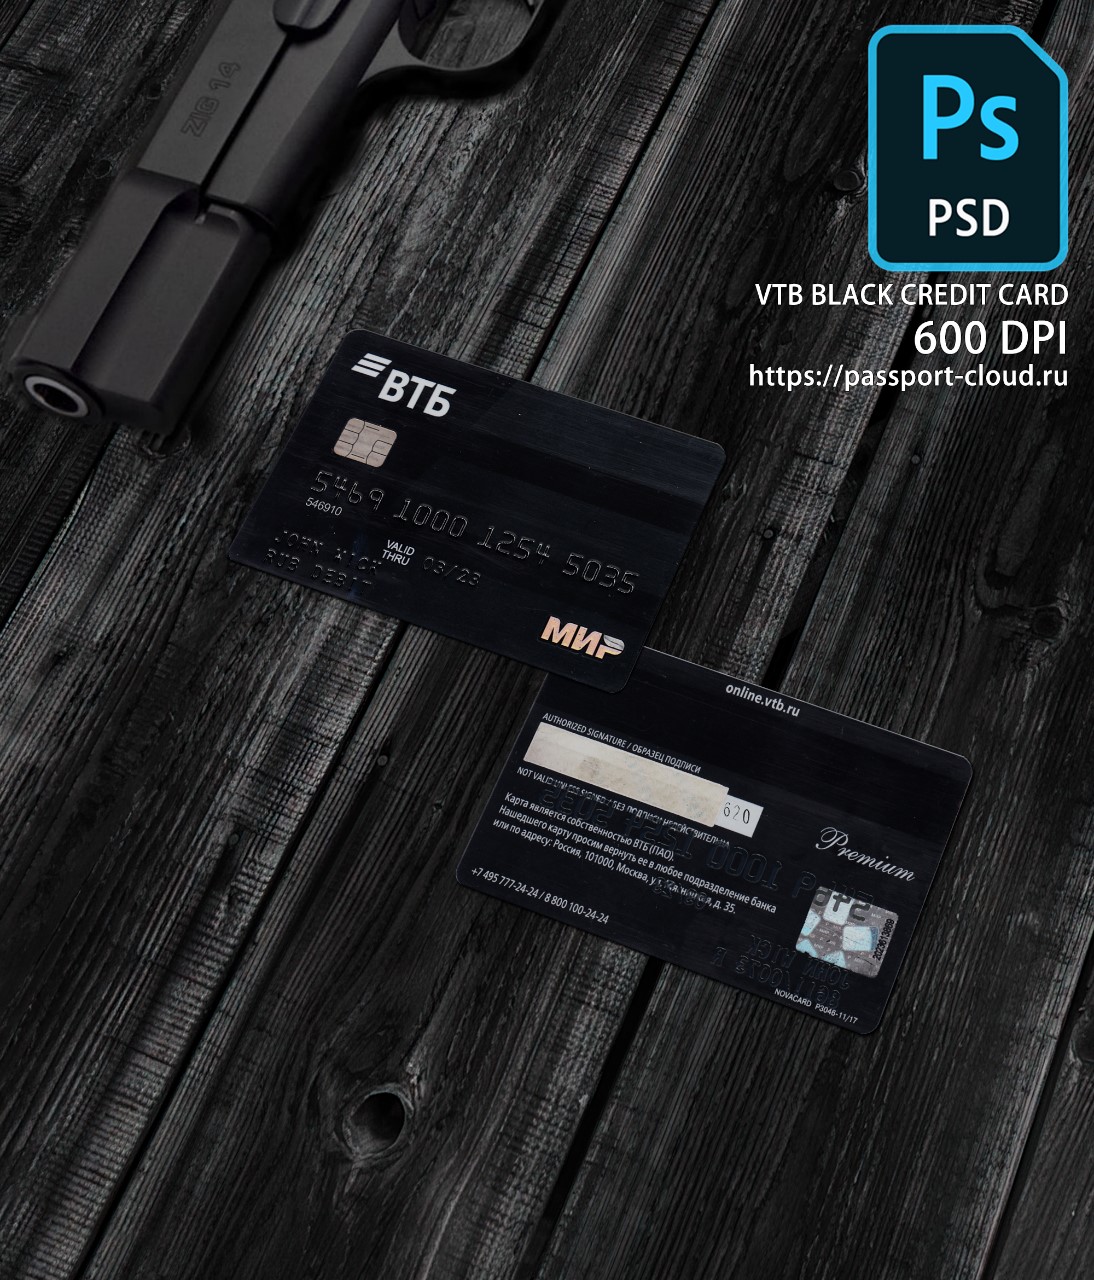 VTB Black Credit Card PSD1